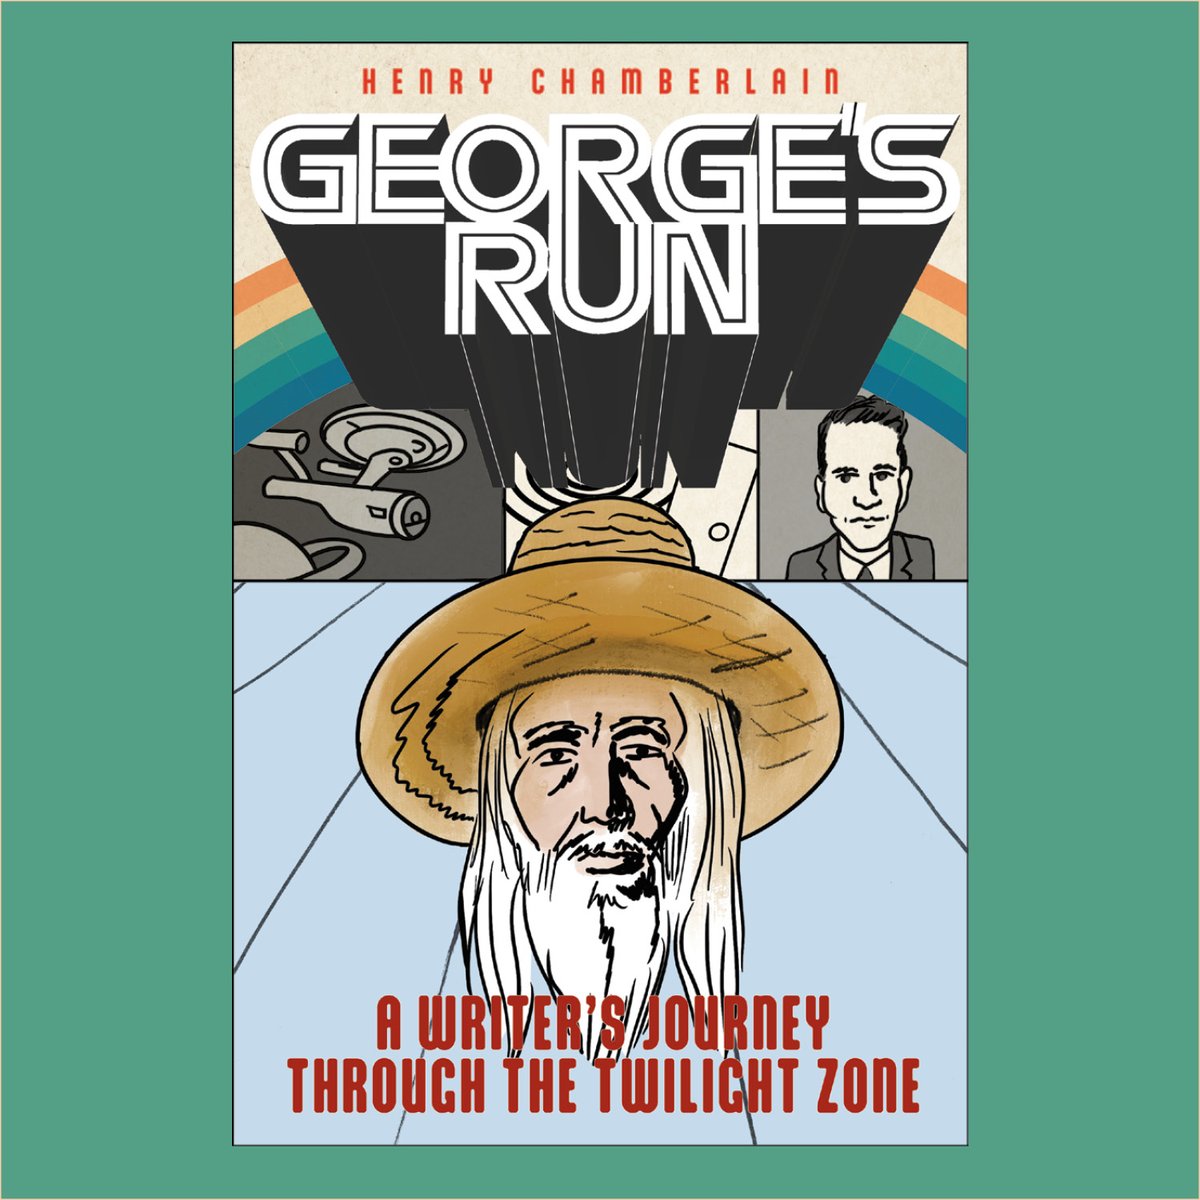 “George's Run: A Writer's Journey through the Twilight Zone”
by Henry Chamberlain

rutgersuniversitypress.org/georges-run/97…

#NewBookAnnouncement #MediaStudies #PopularCulture